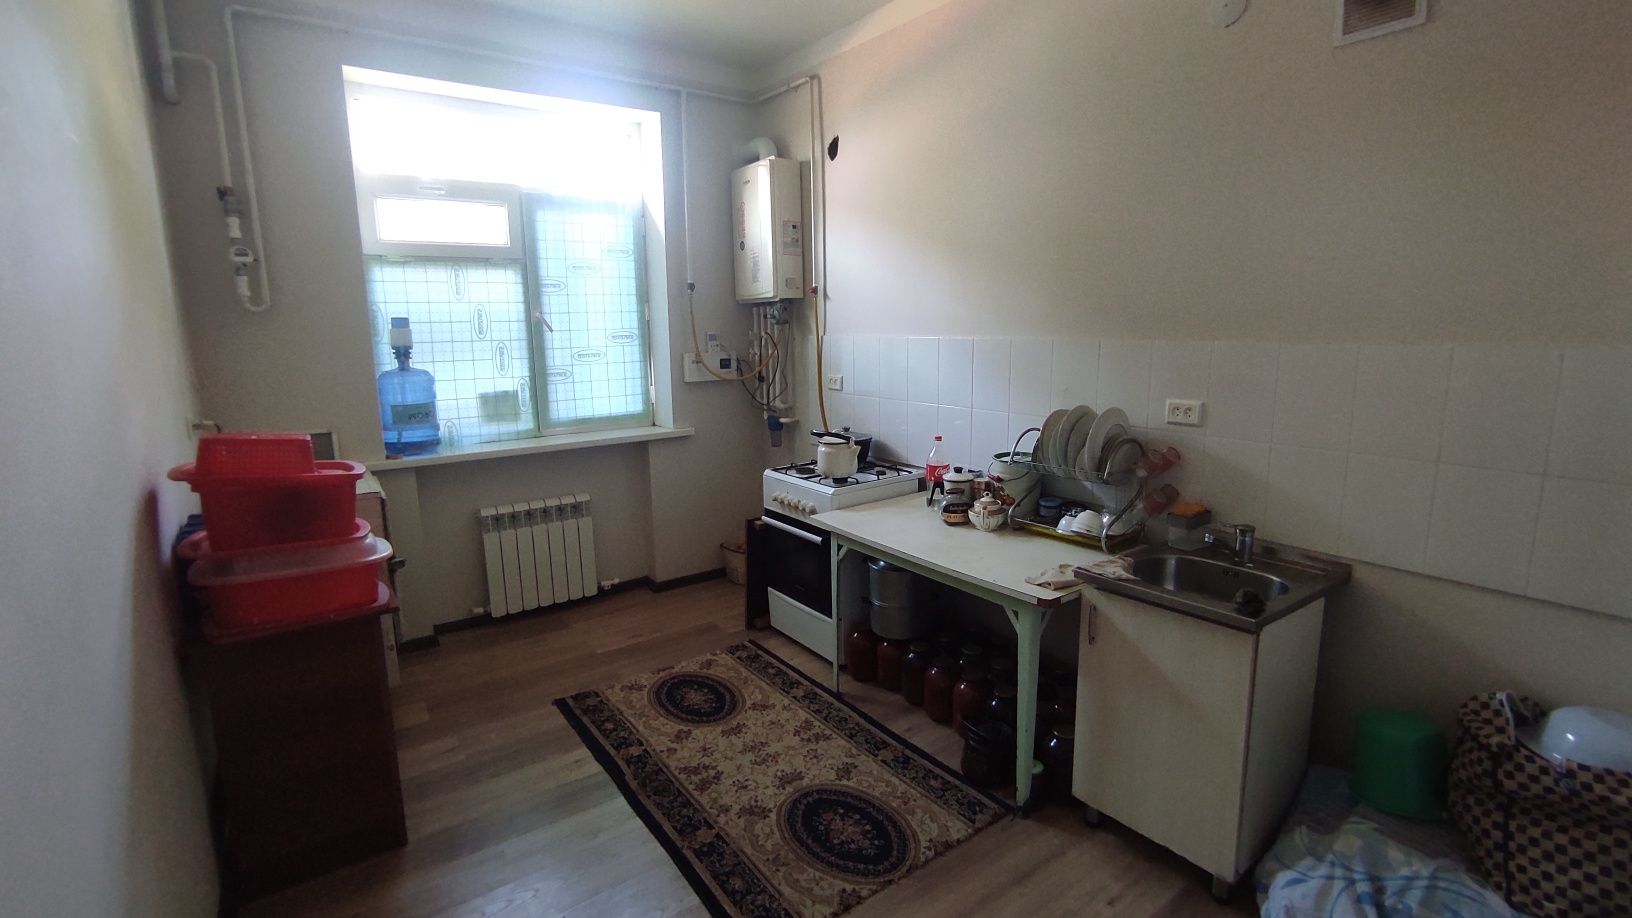 Продаётся 2 х комнатная квартира в Мирзо Улугбекском районе